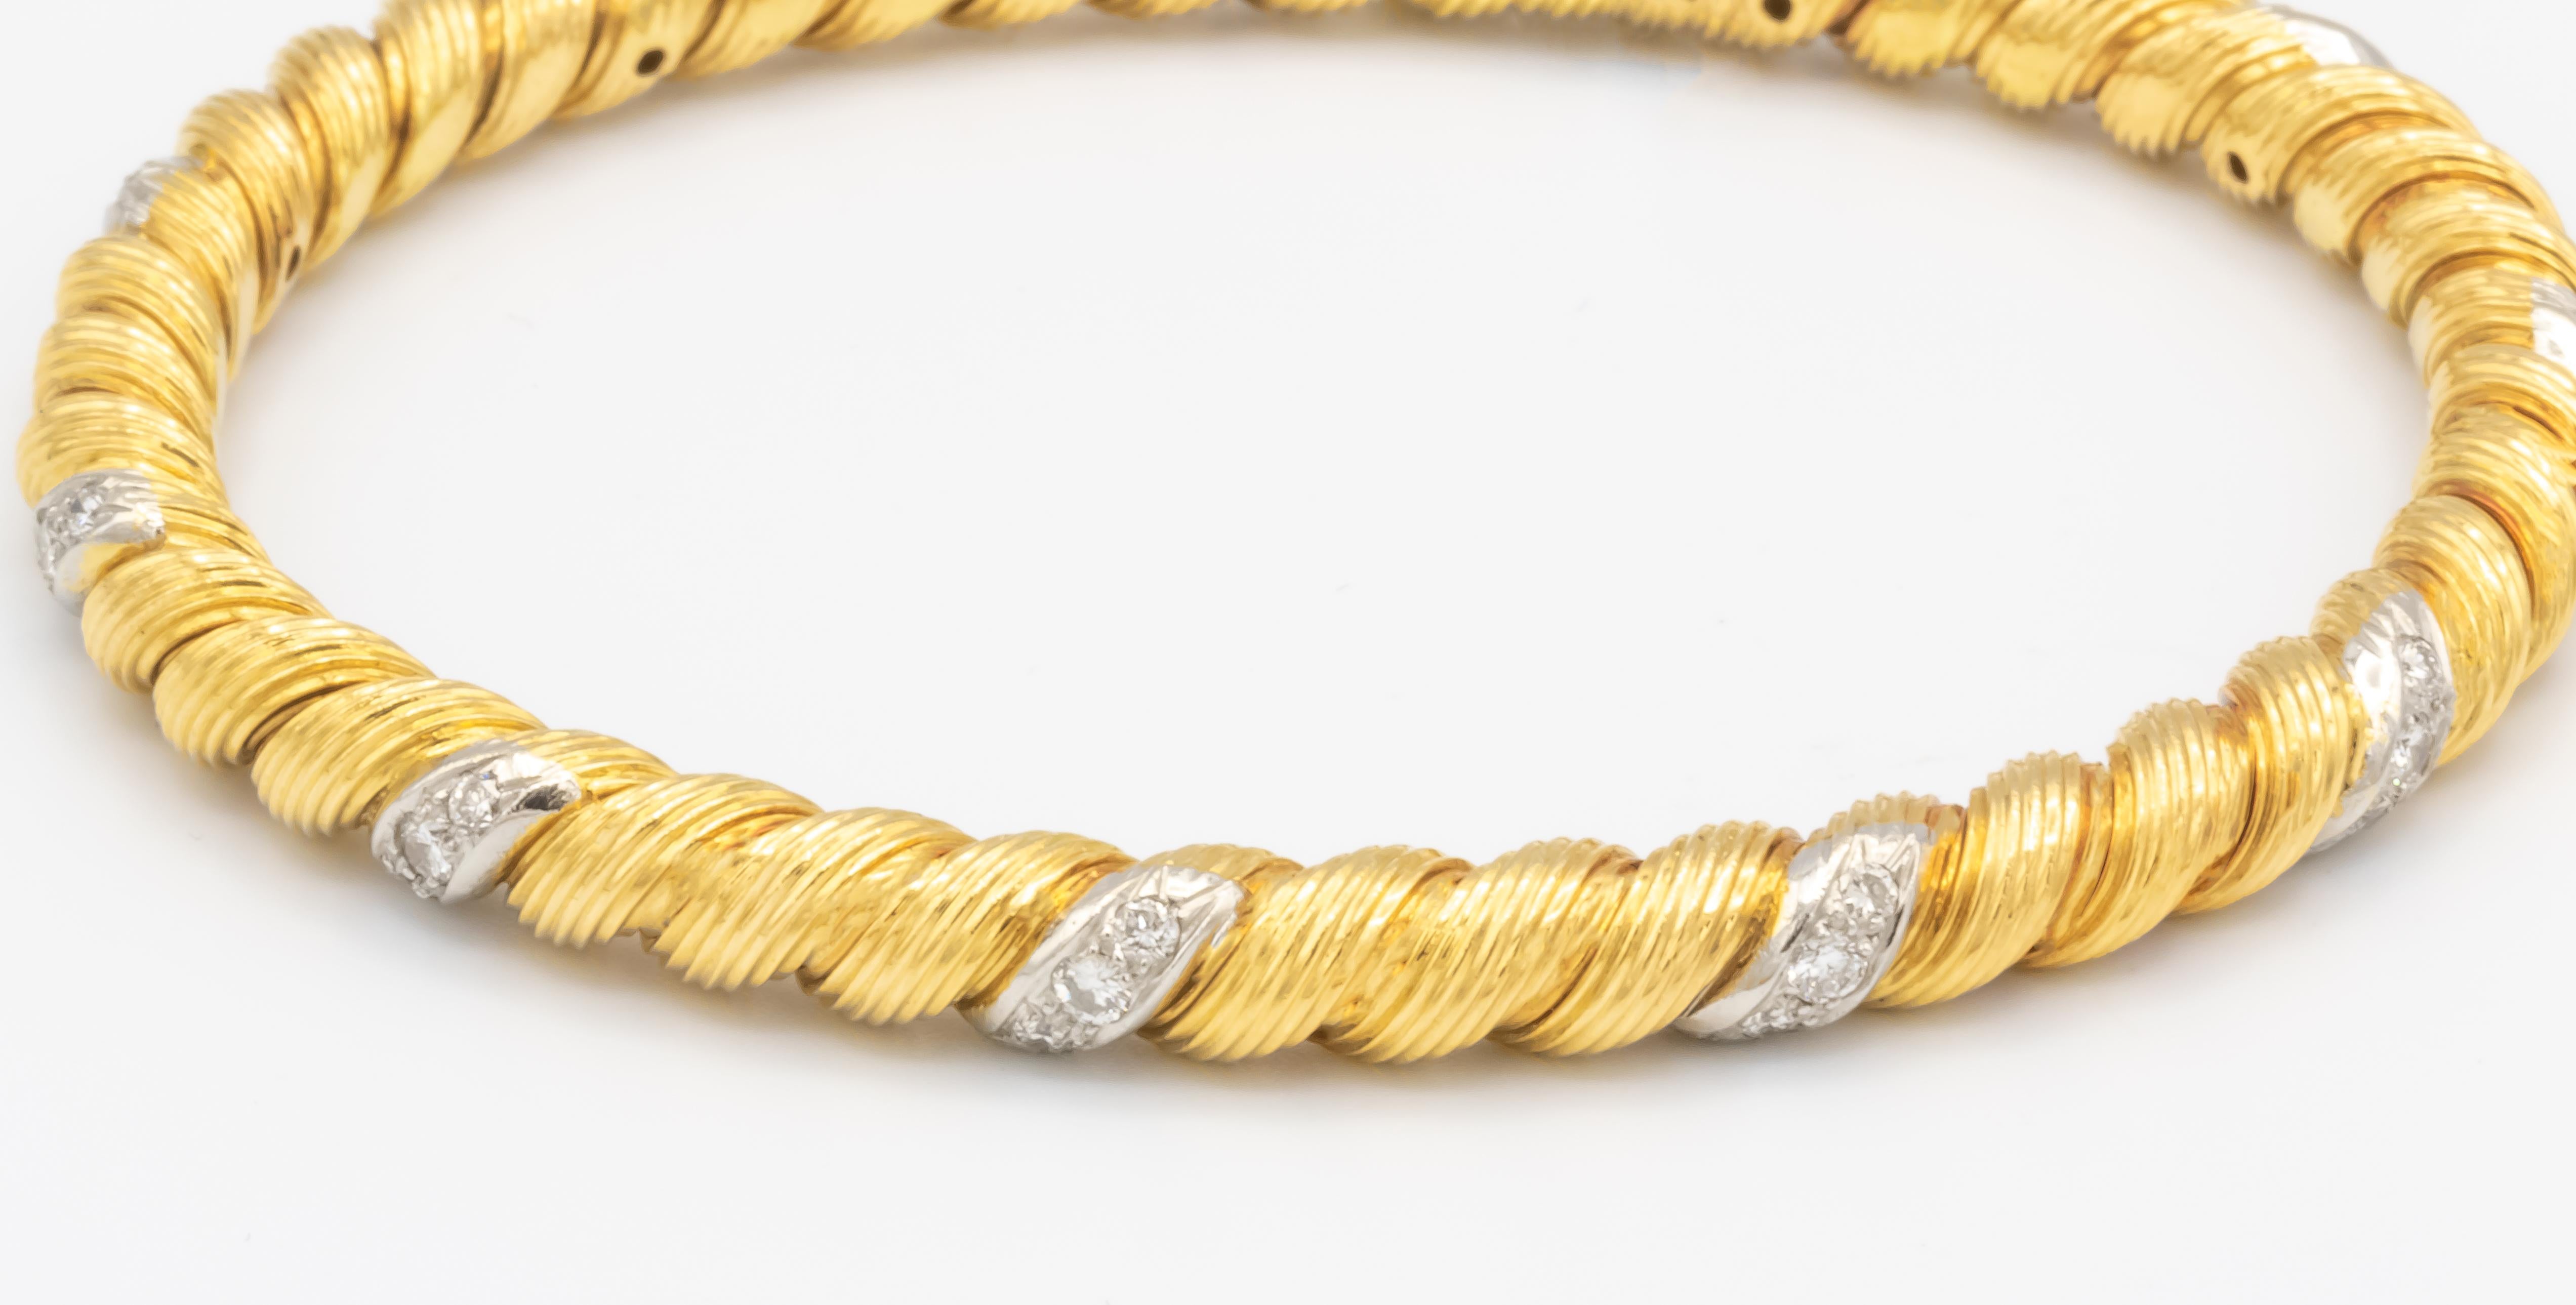 Women's or Men's Van Cleef & Arpels Braided Yellow Gold and Diamonds Stackable Bangle Bracelet